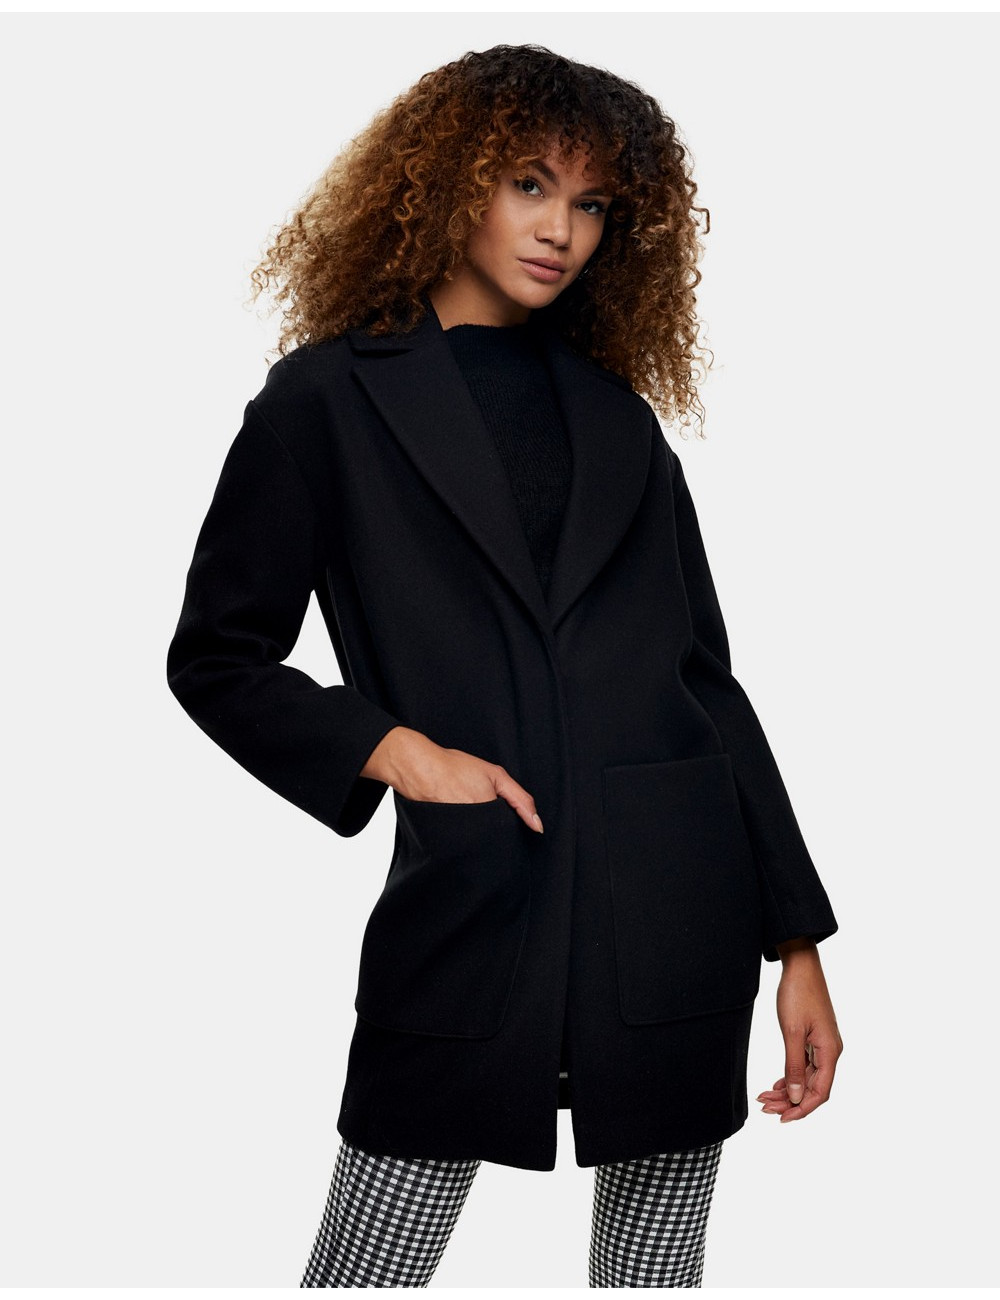 Topshop tailored coat in black